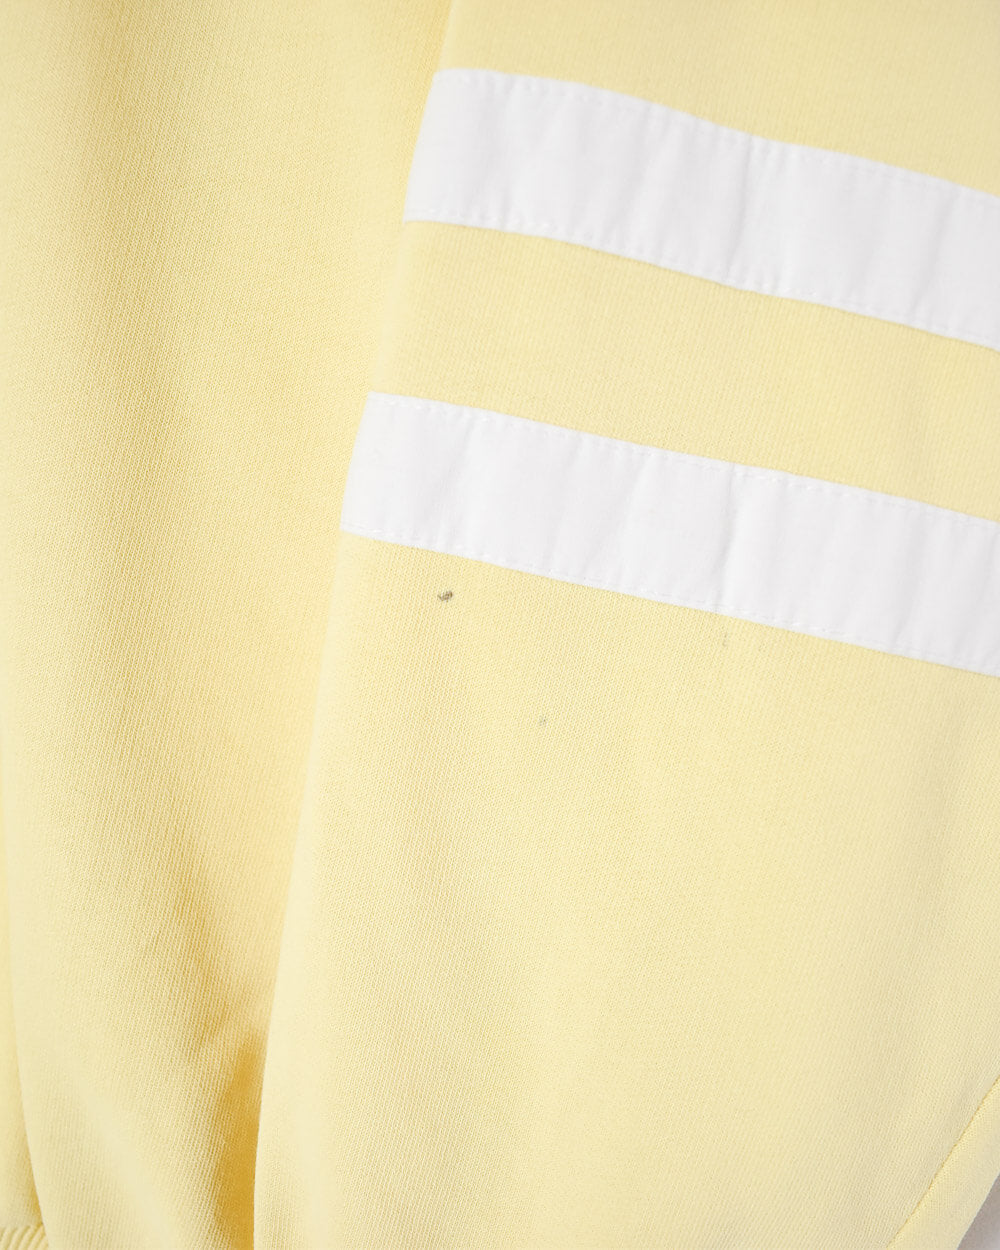 Yellow St Michael Sweatshirt - Small